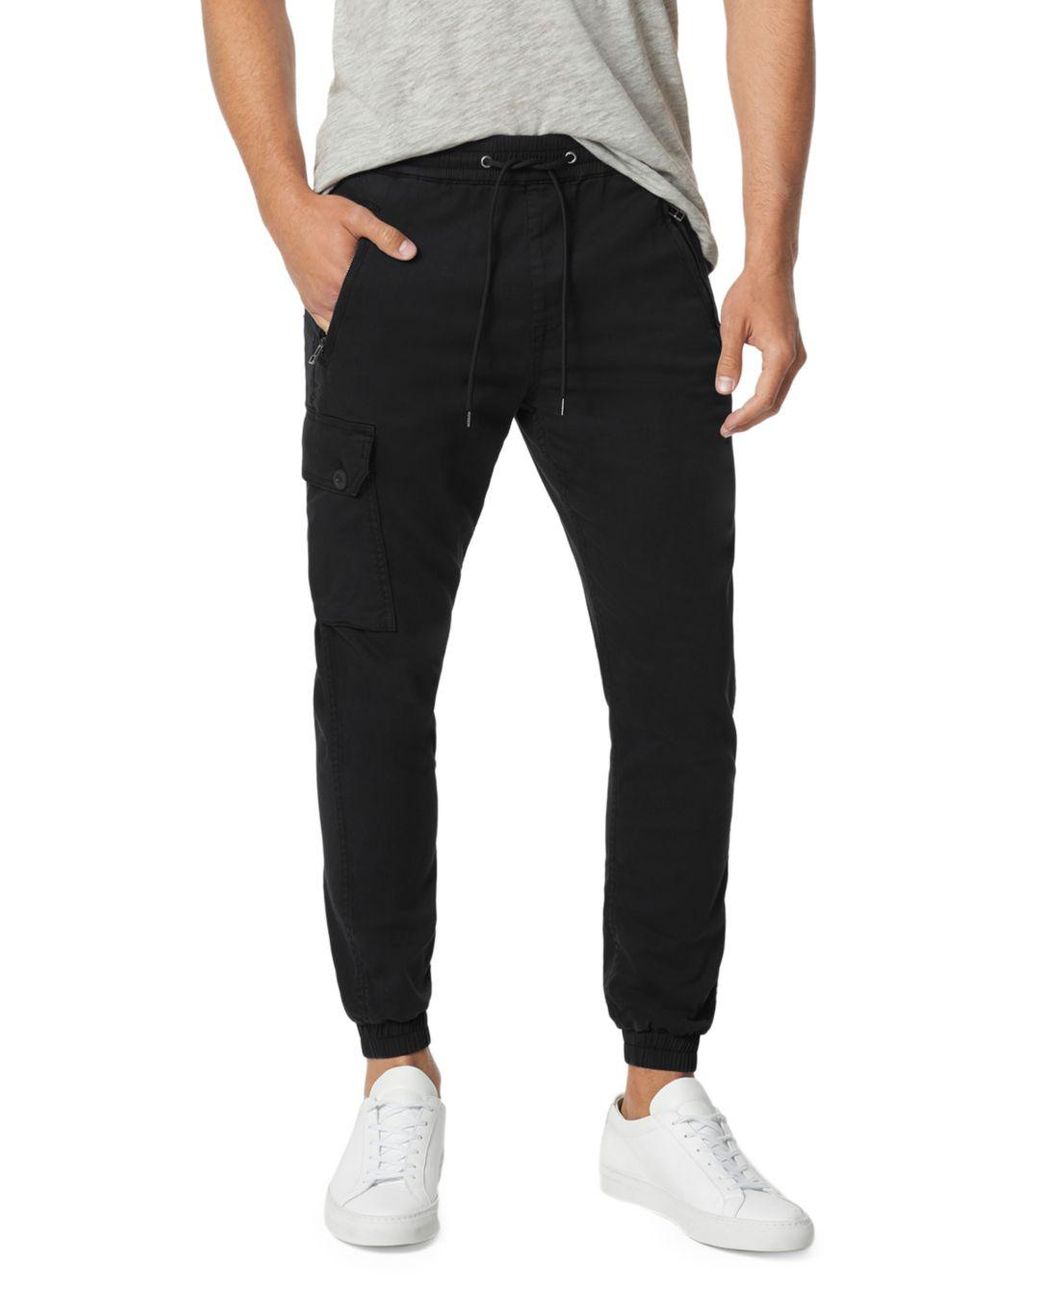 Joe's Jeans Cotton Cargo Jogger Pants in Black for Men - Lyst